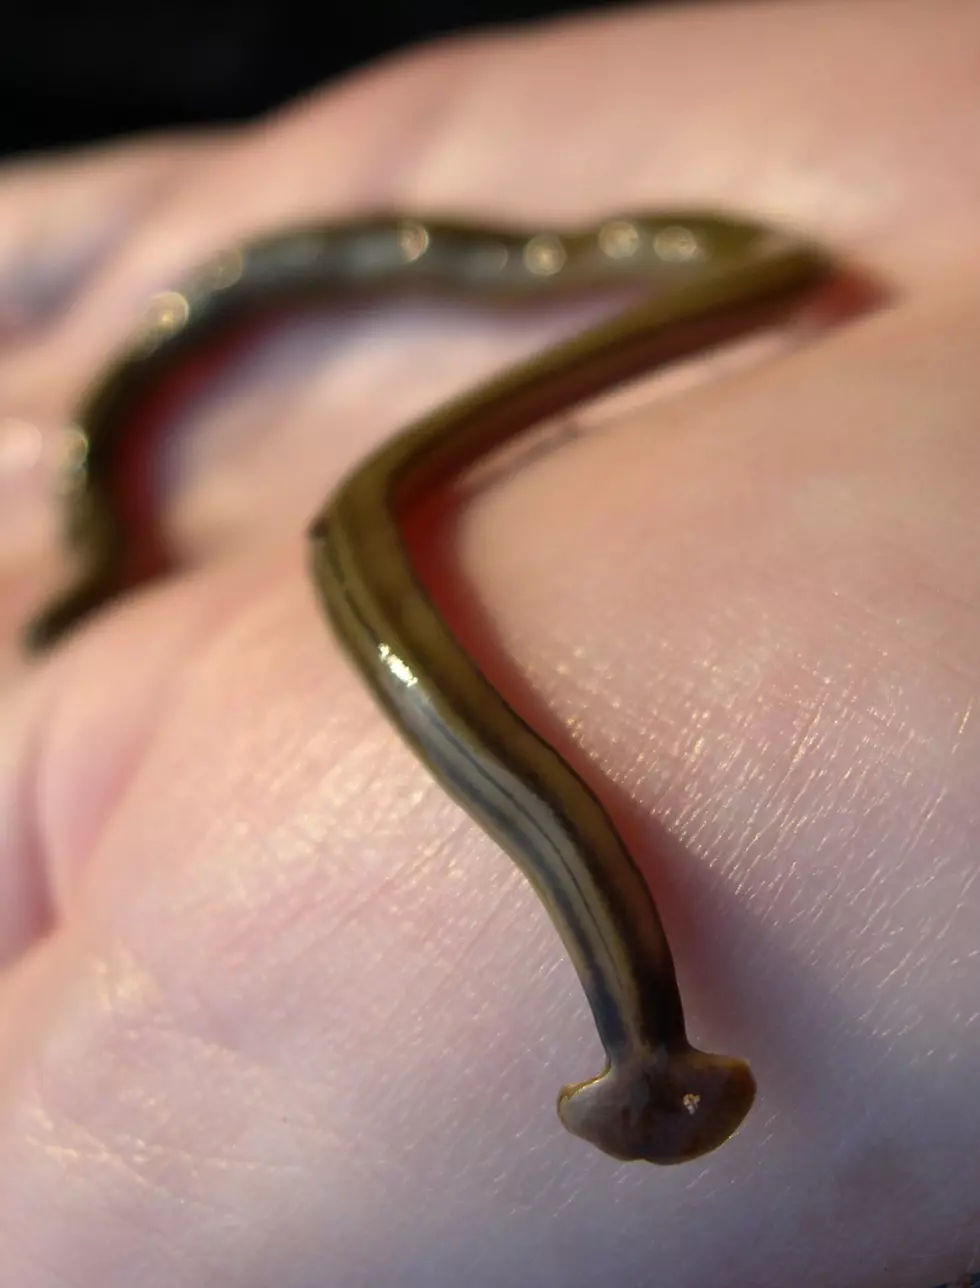 How Long Before Mutant Killer Earthworms Arrive in Lubbock?